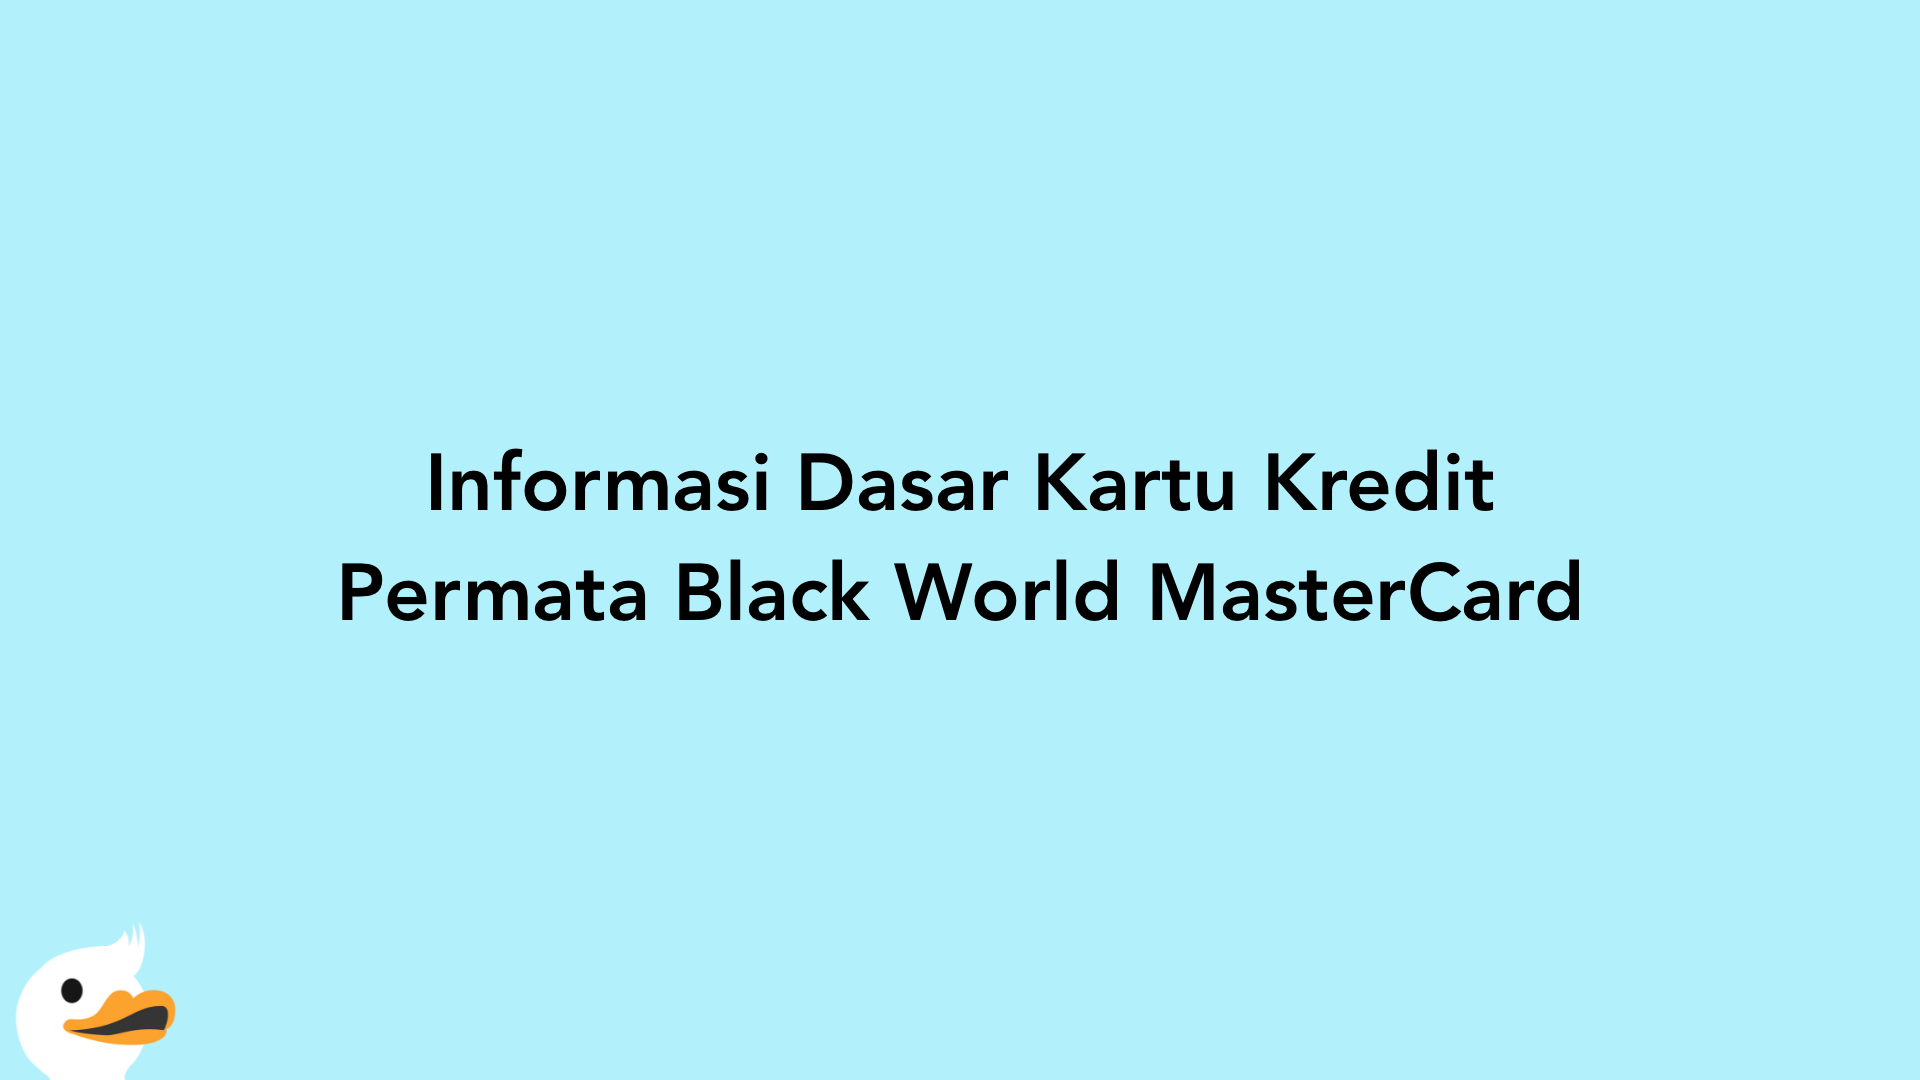 Informasi Dasar Kartu Kredit Permata Black World MasterCard